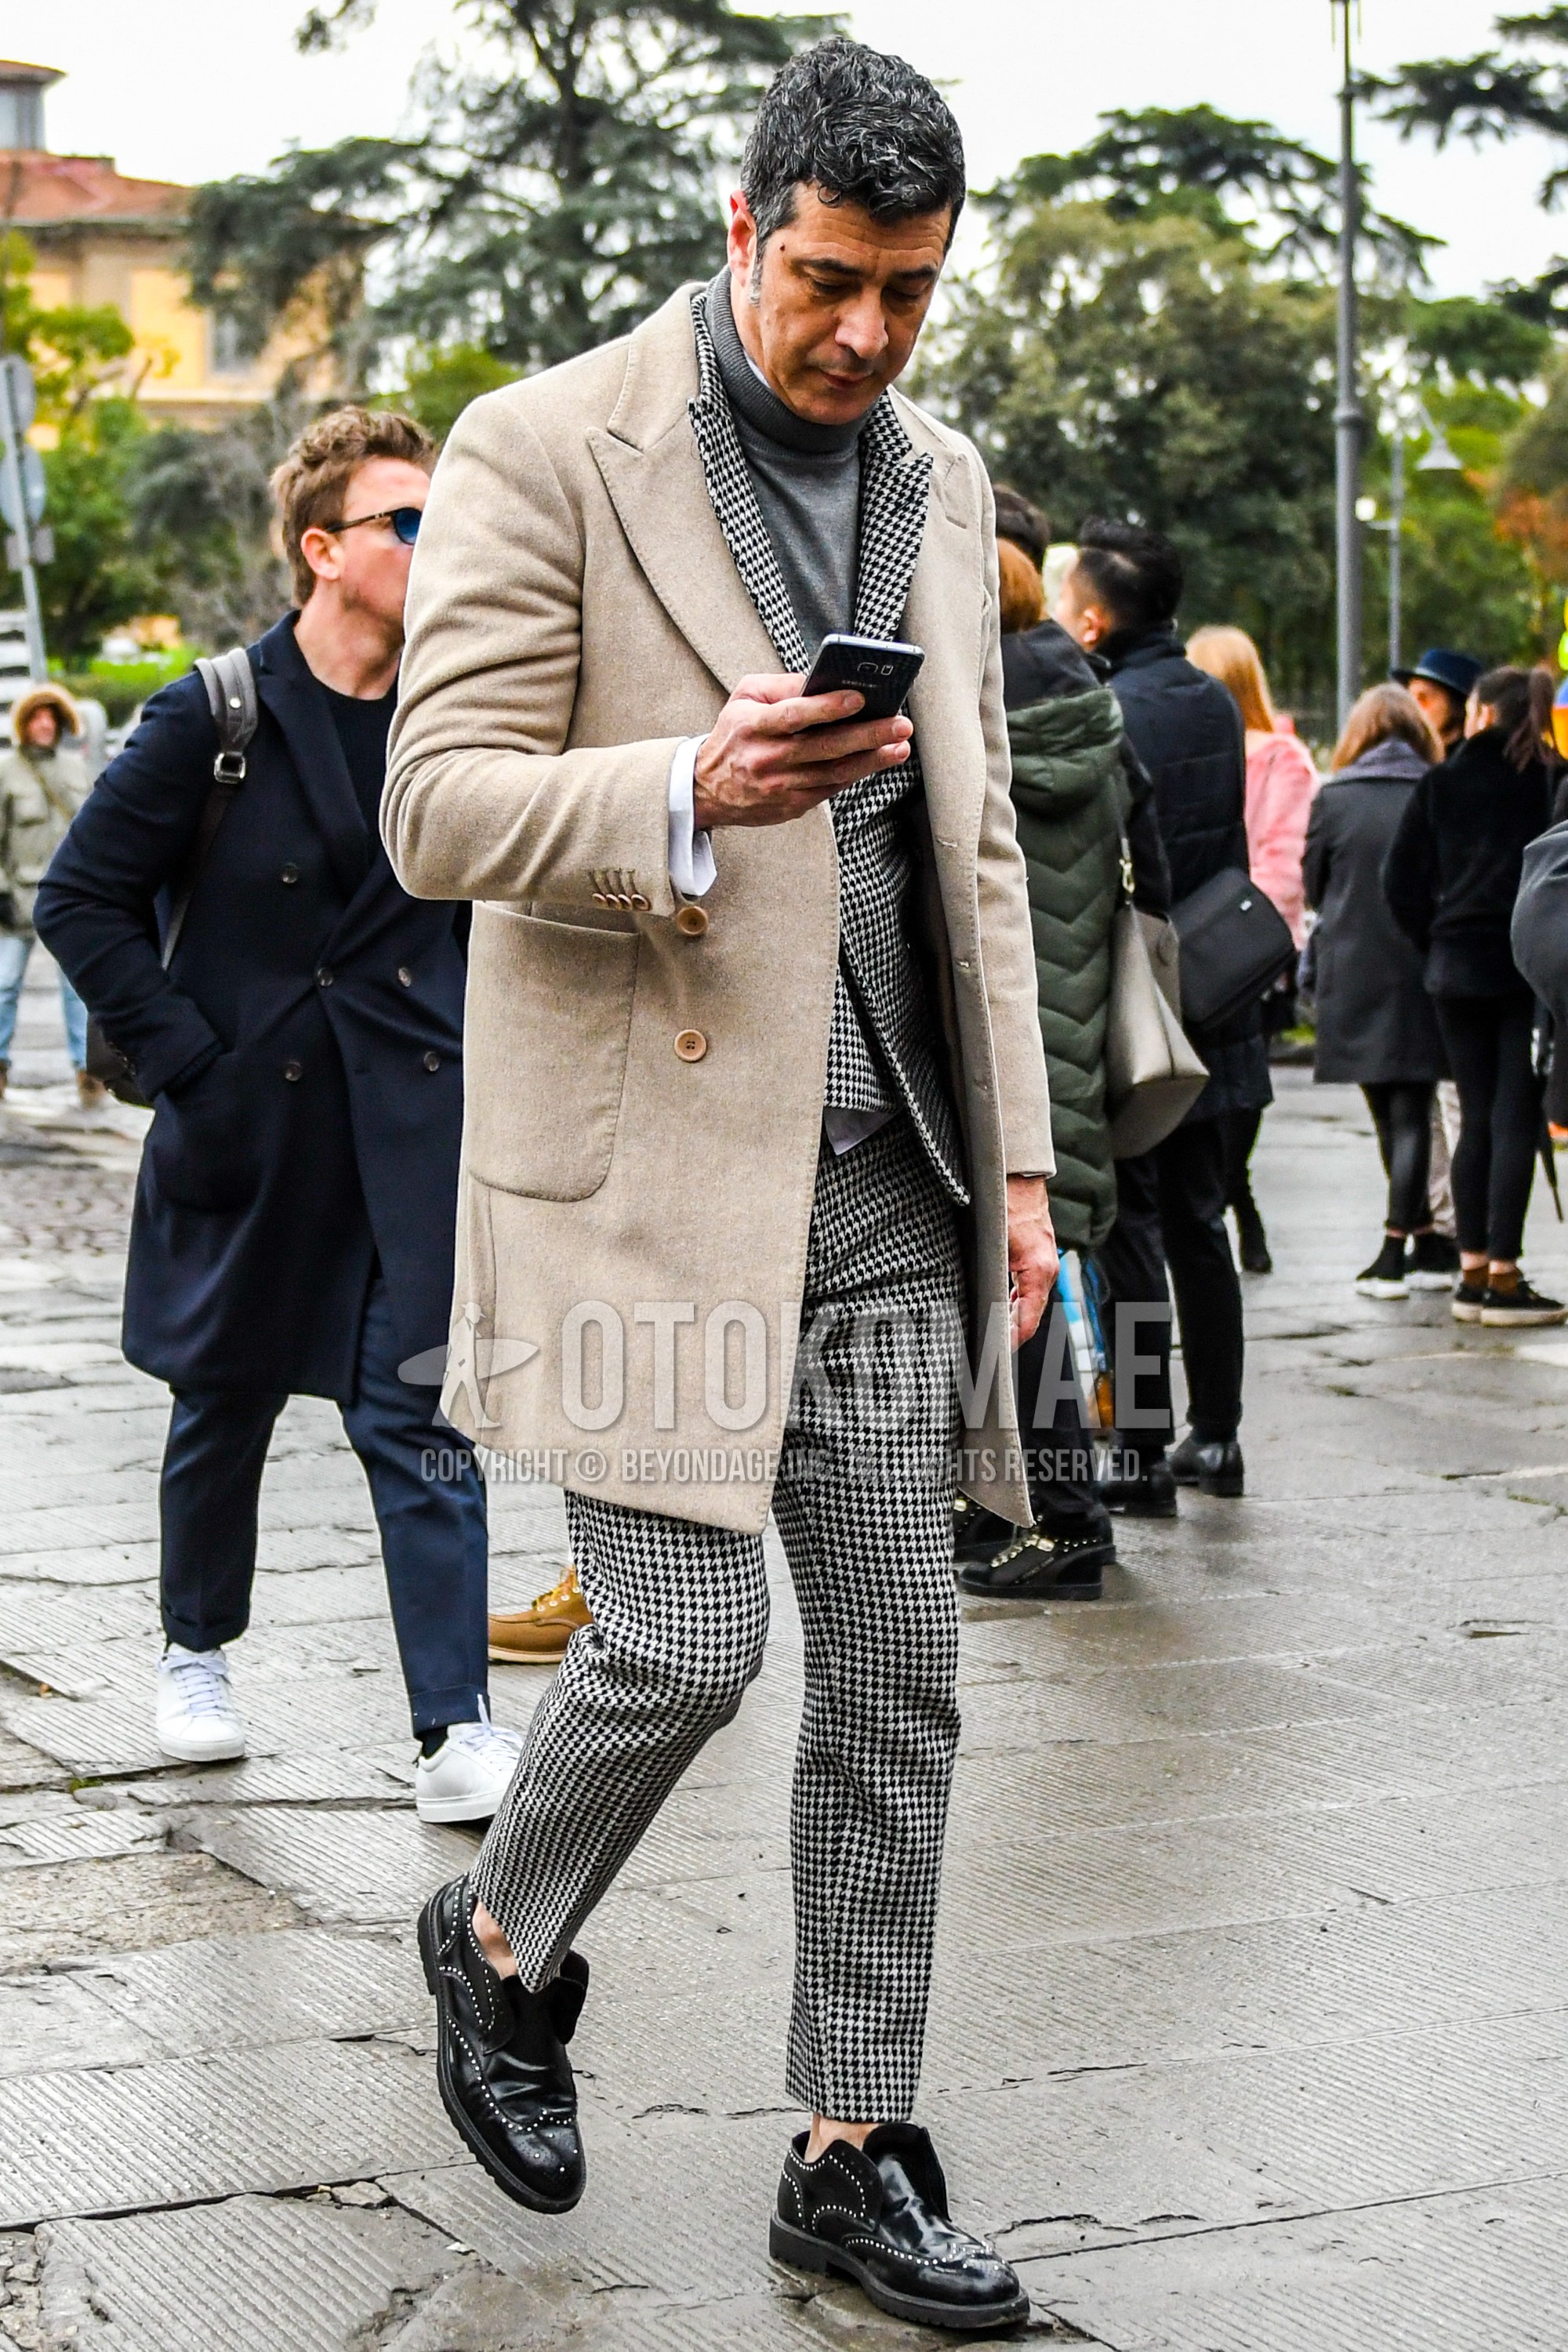 Men's winter outfit with beige plain chester coat, gray plain turtleneck knit, black brogue shoes leather shoes, gray check suit.